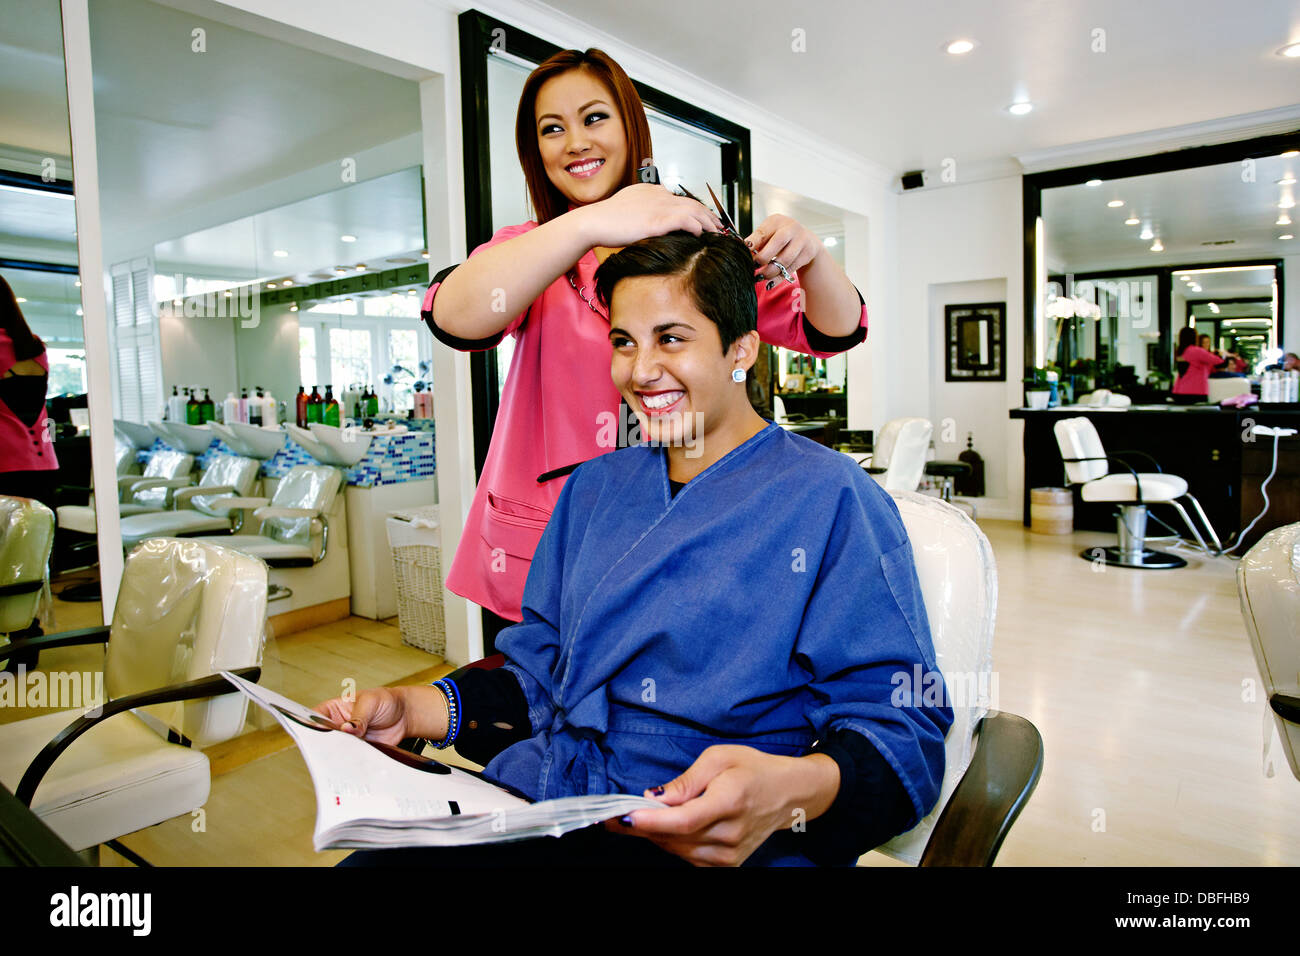 Woman having hair cut in salon Stock Photo